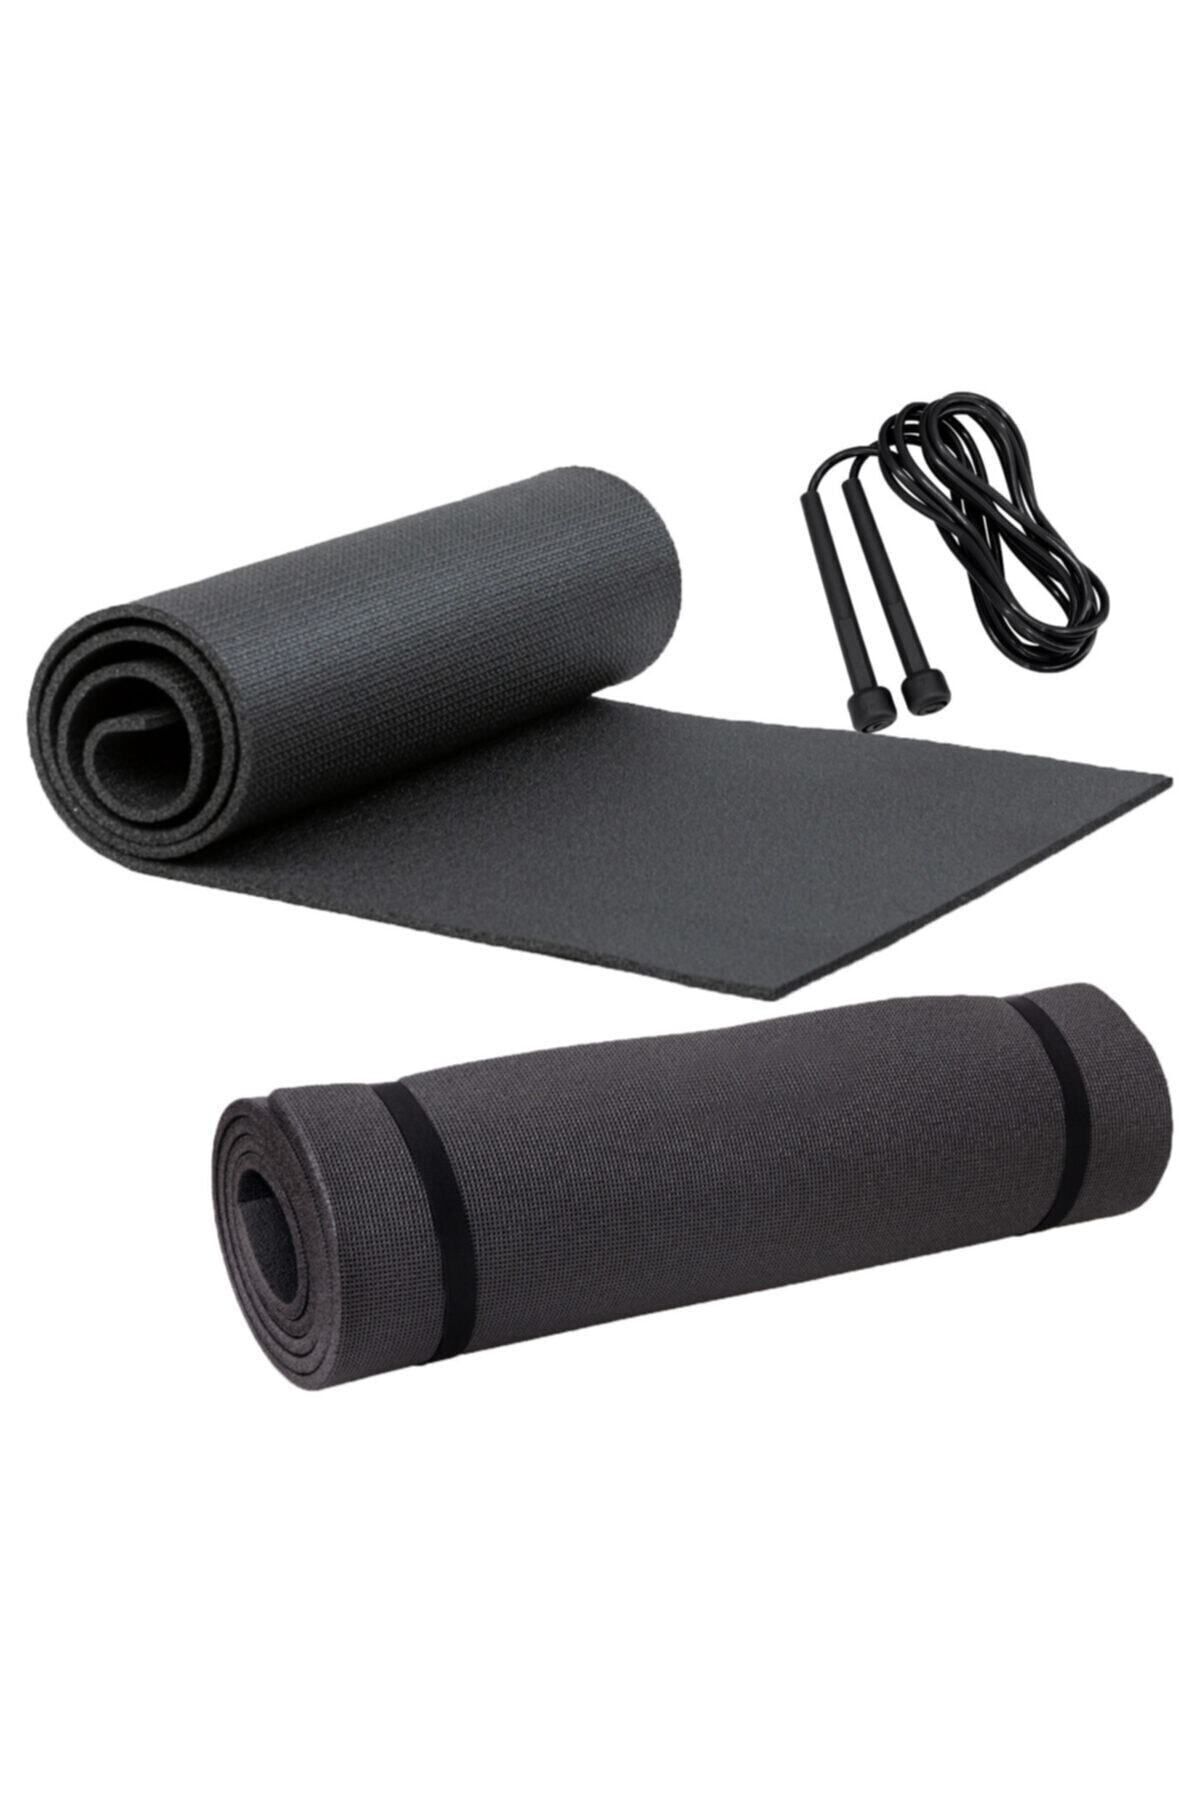 Genel Markalar Siyah Pilates Minderi Ve Yoga Egzersiz Matı 6,5mm + Atlama Ipi